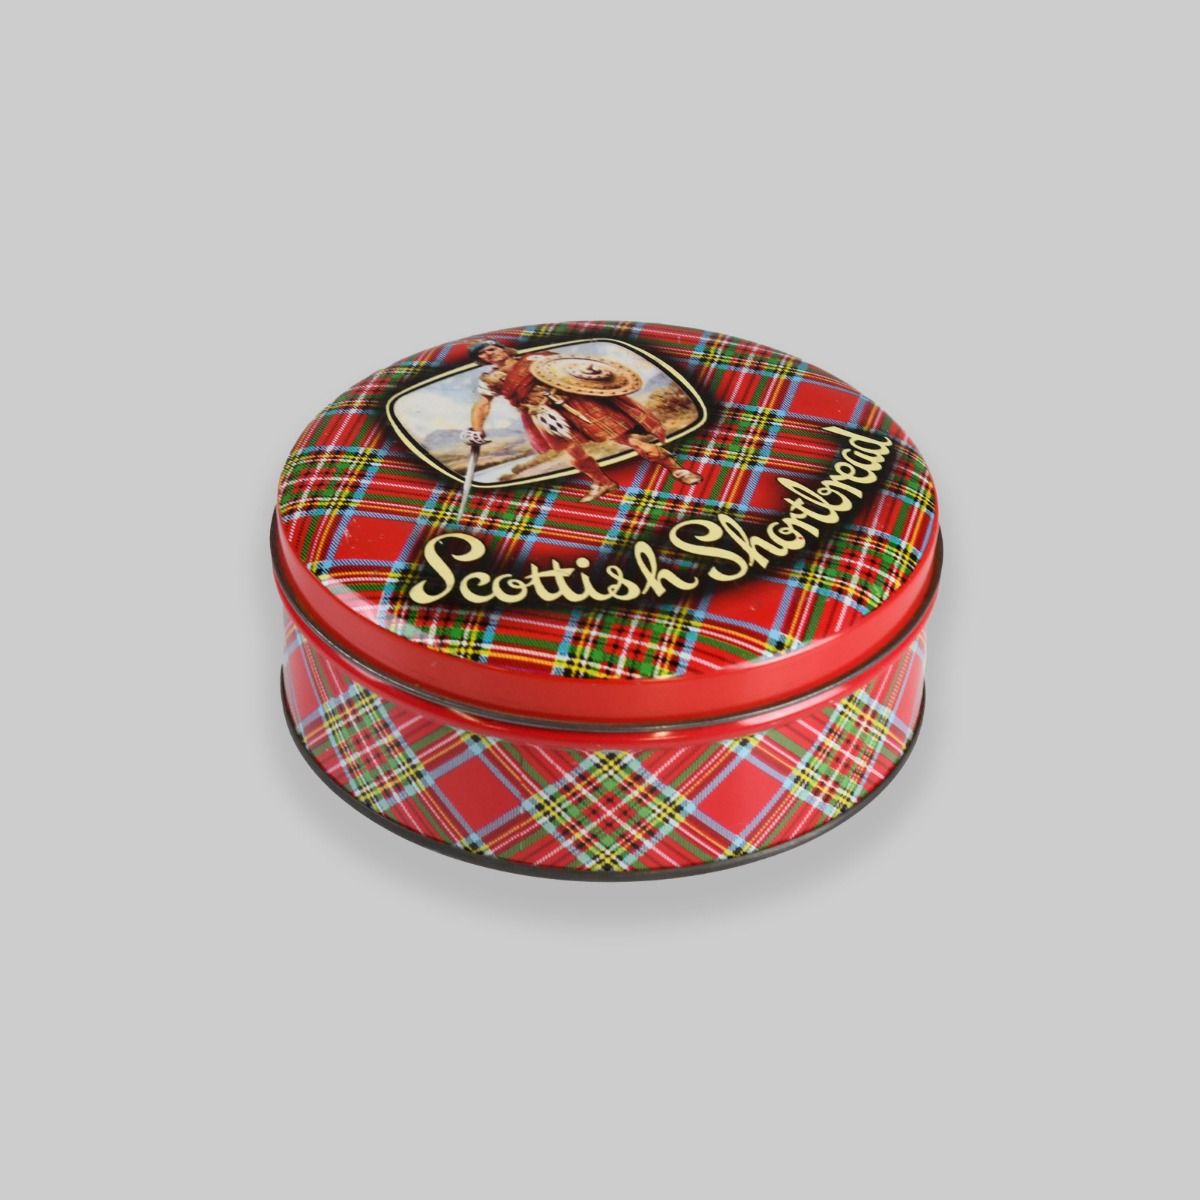 Vintage 1970s Scottish Shortbread Biscuit Tin